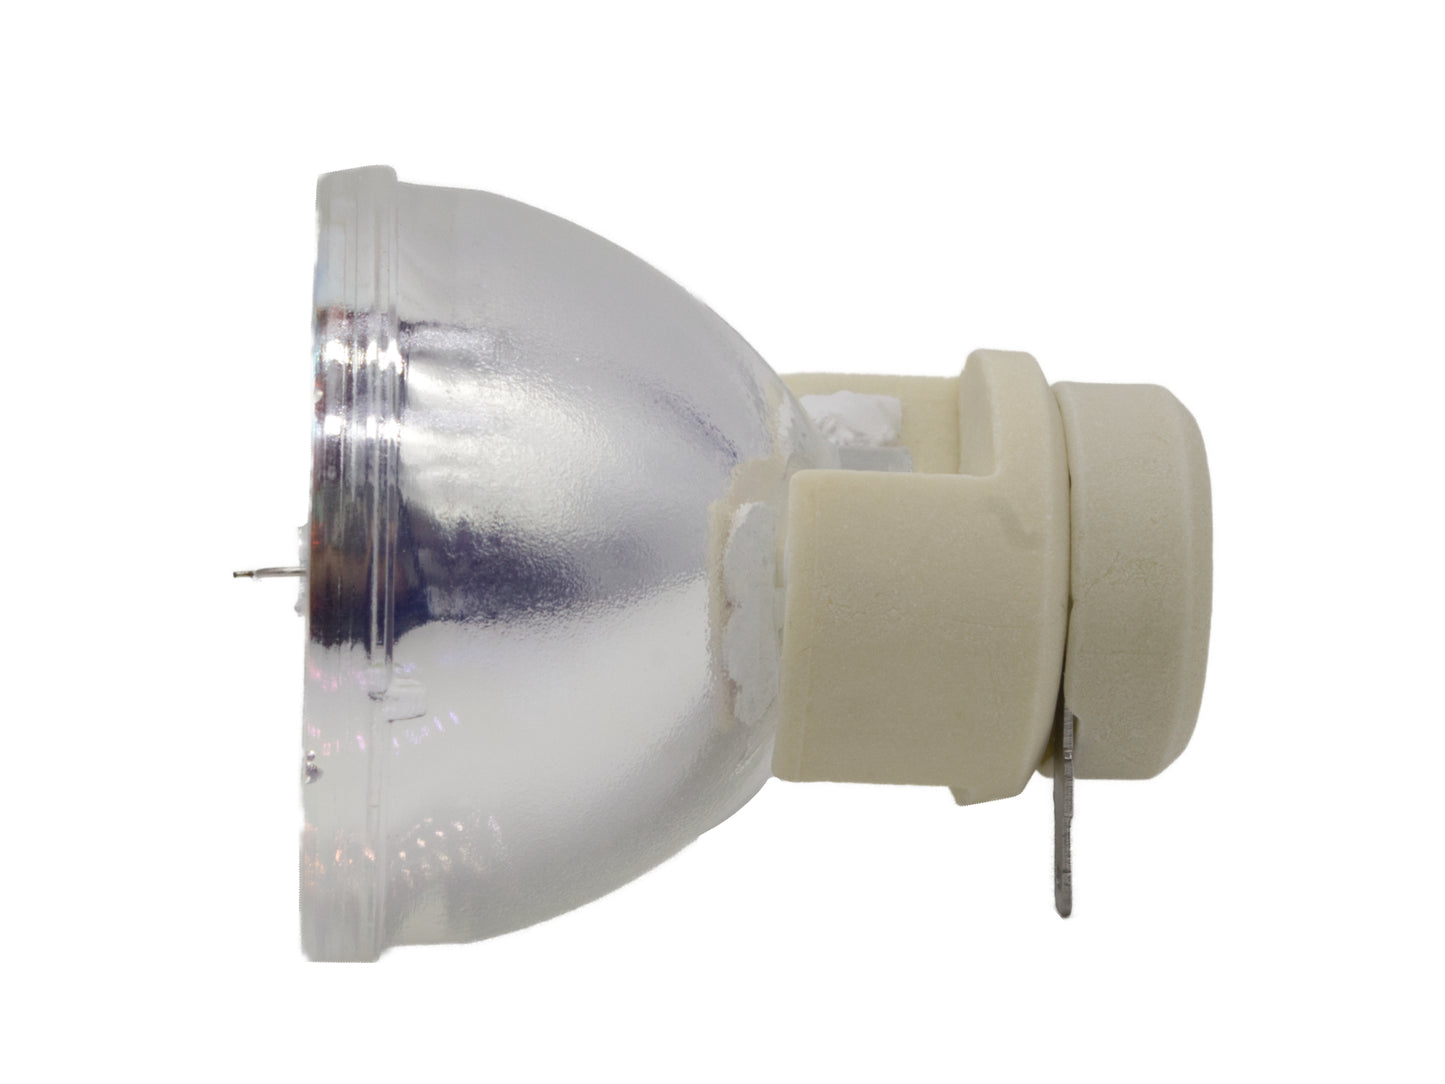 azurano Beamerlampe für ACER MC.JN811.001 Ersatzlampe Projektorlampe - Bild 2